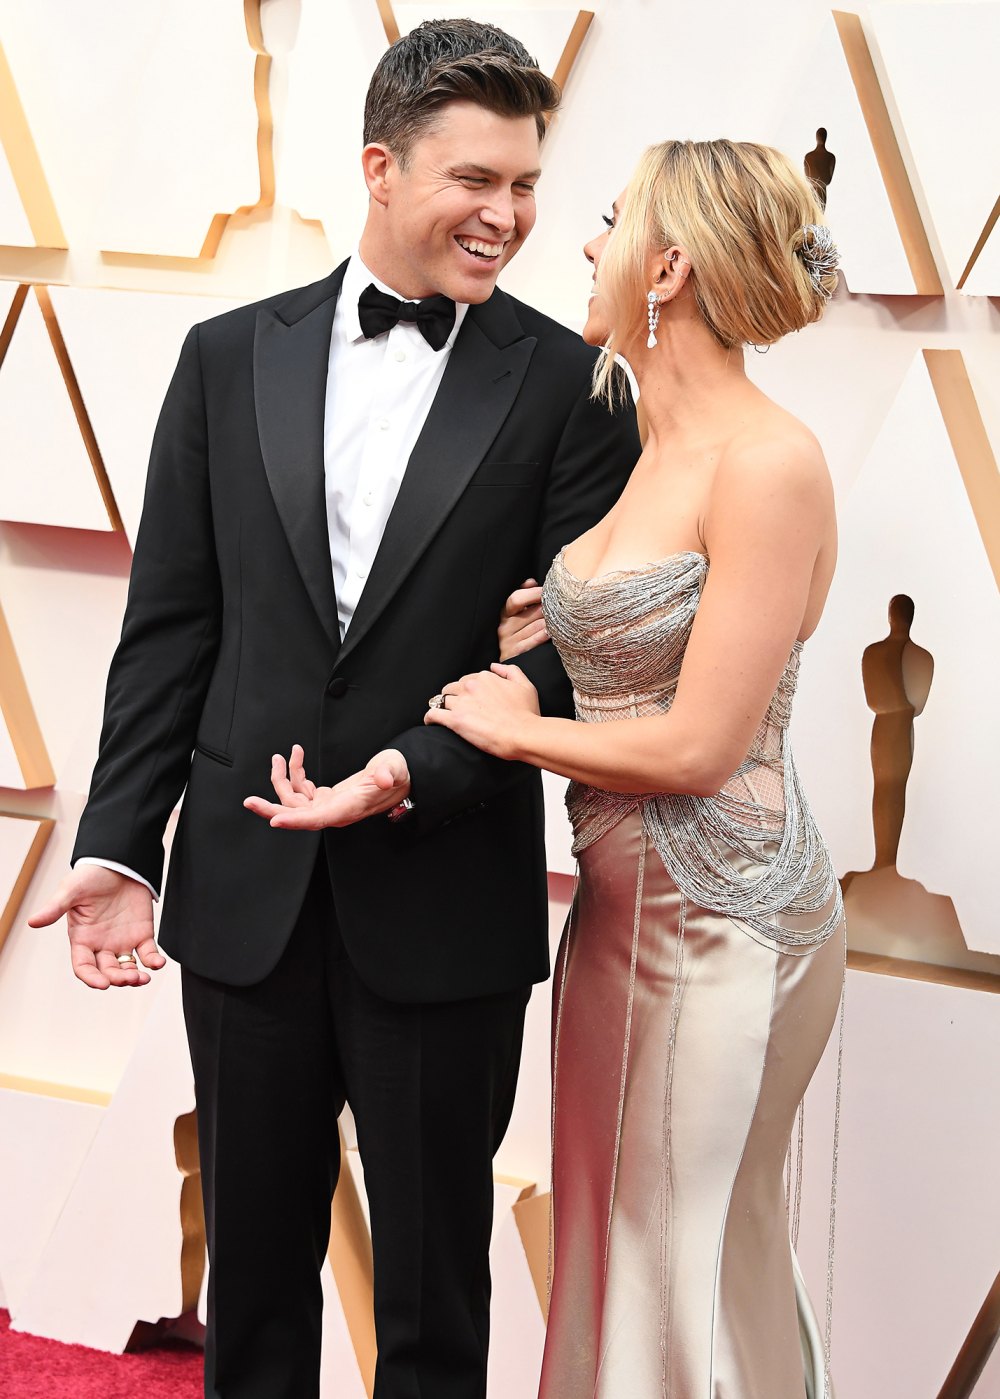 Colin Jost reads Michael Che's 'SNL' story about Scarlett Johansson's movies: 'I'm kidding, honey' 